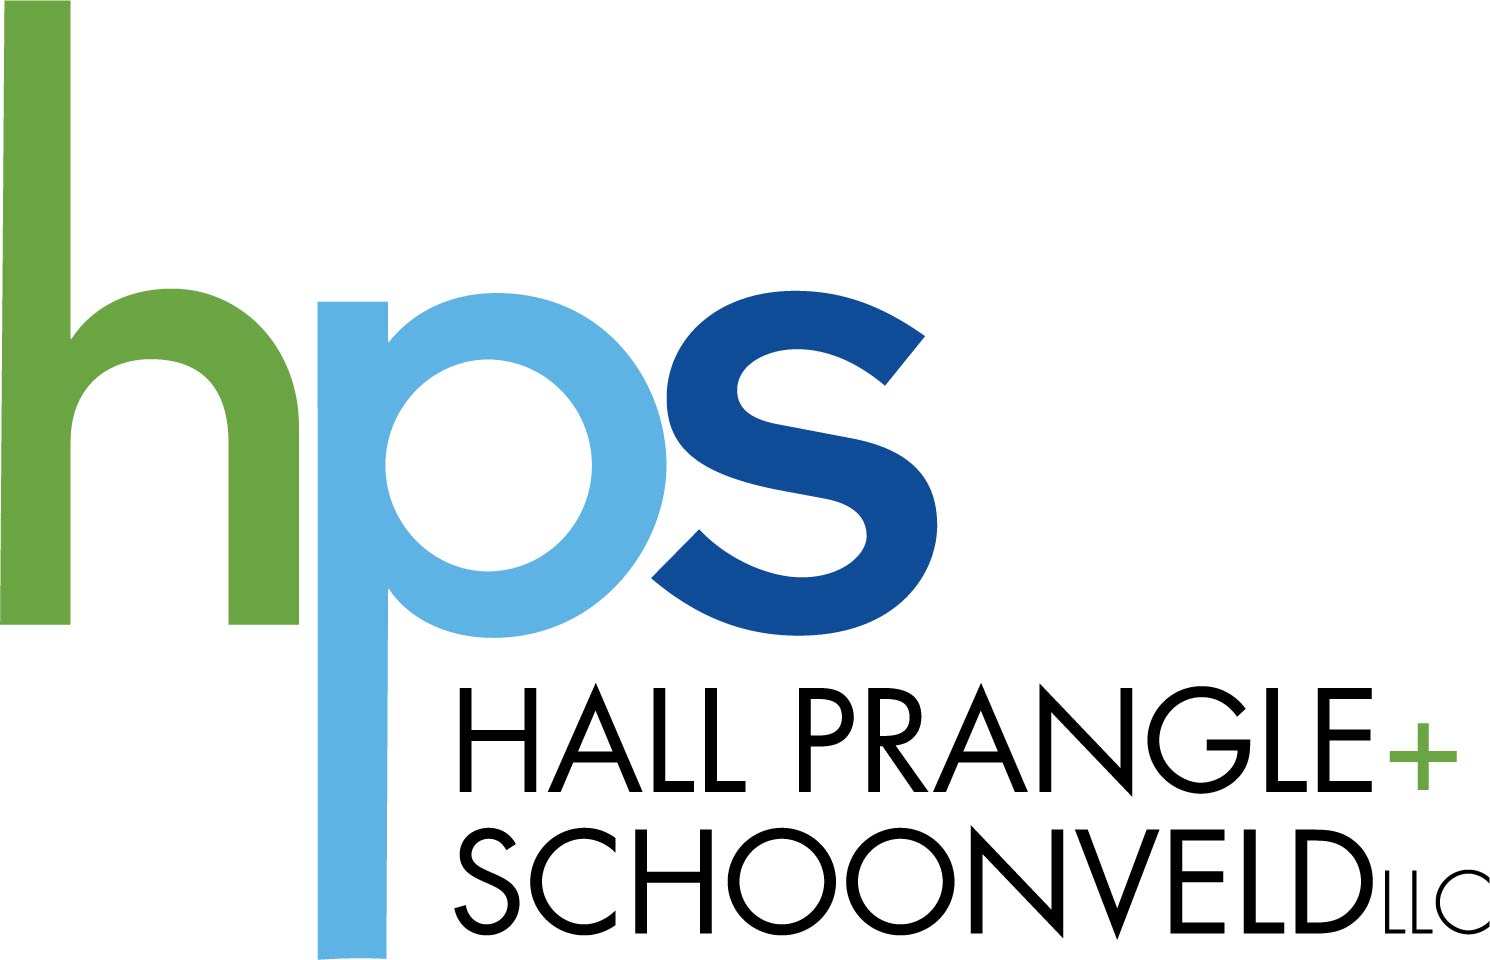 Hall Prangle and Schoonveld LLC